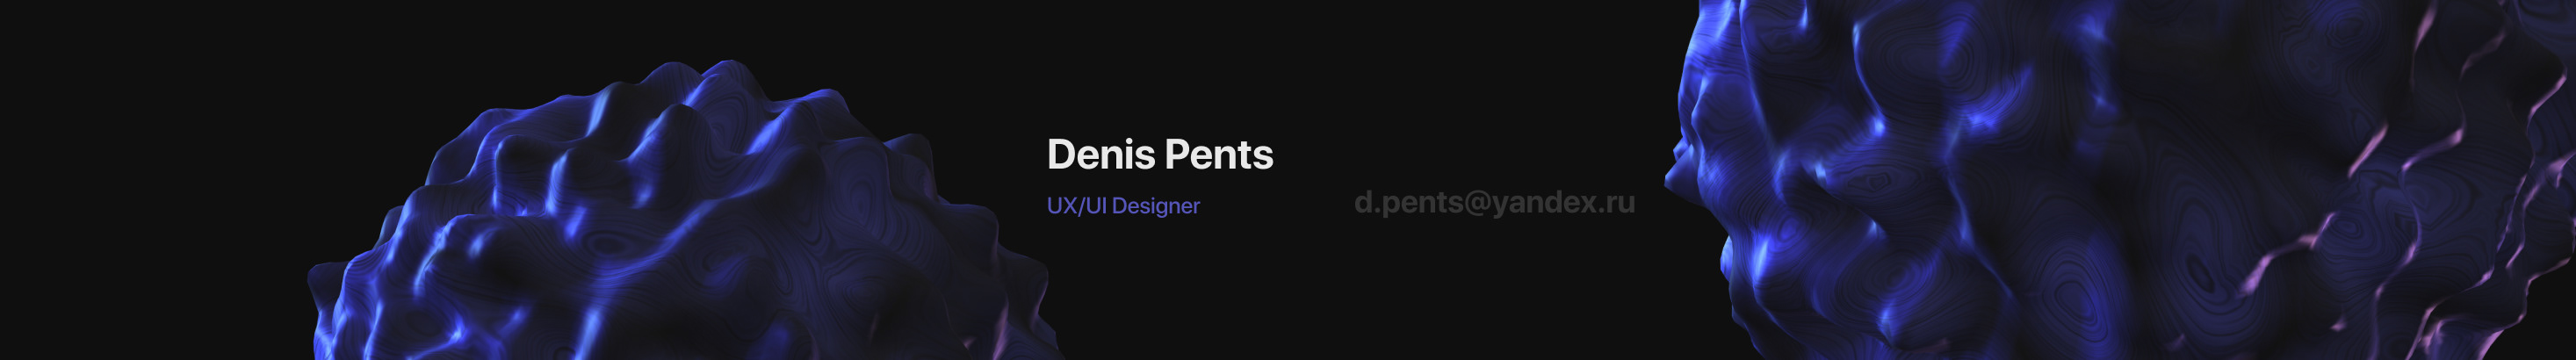 Денис Пенц's profile banner